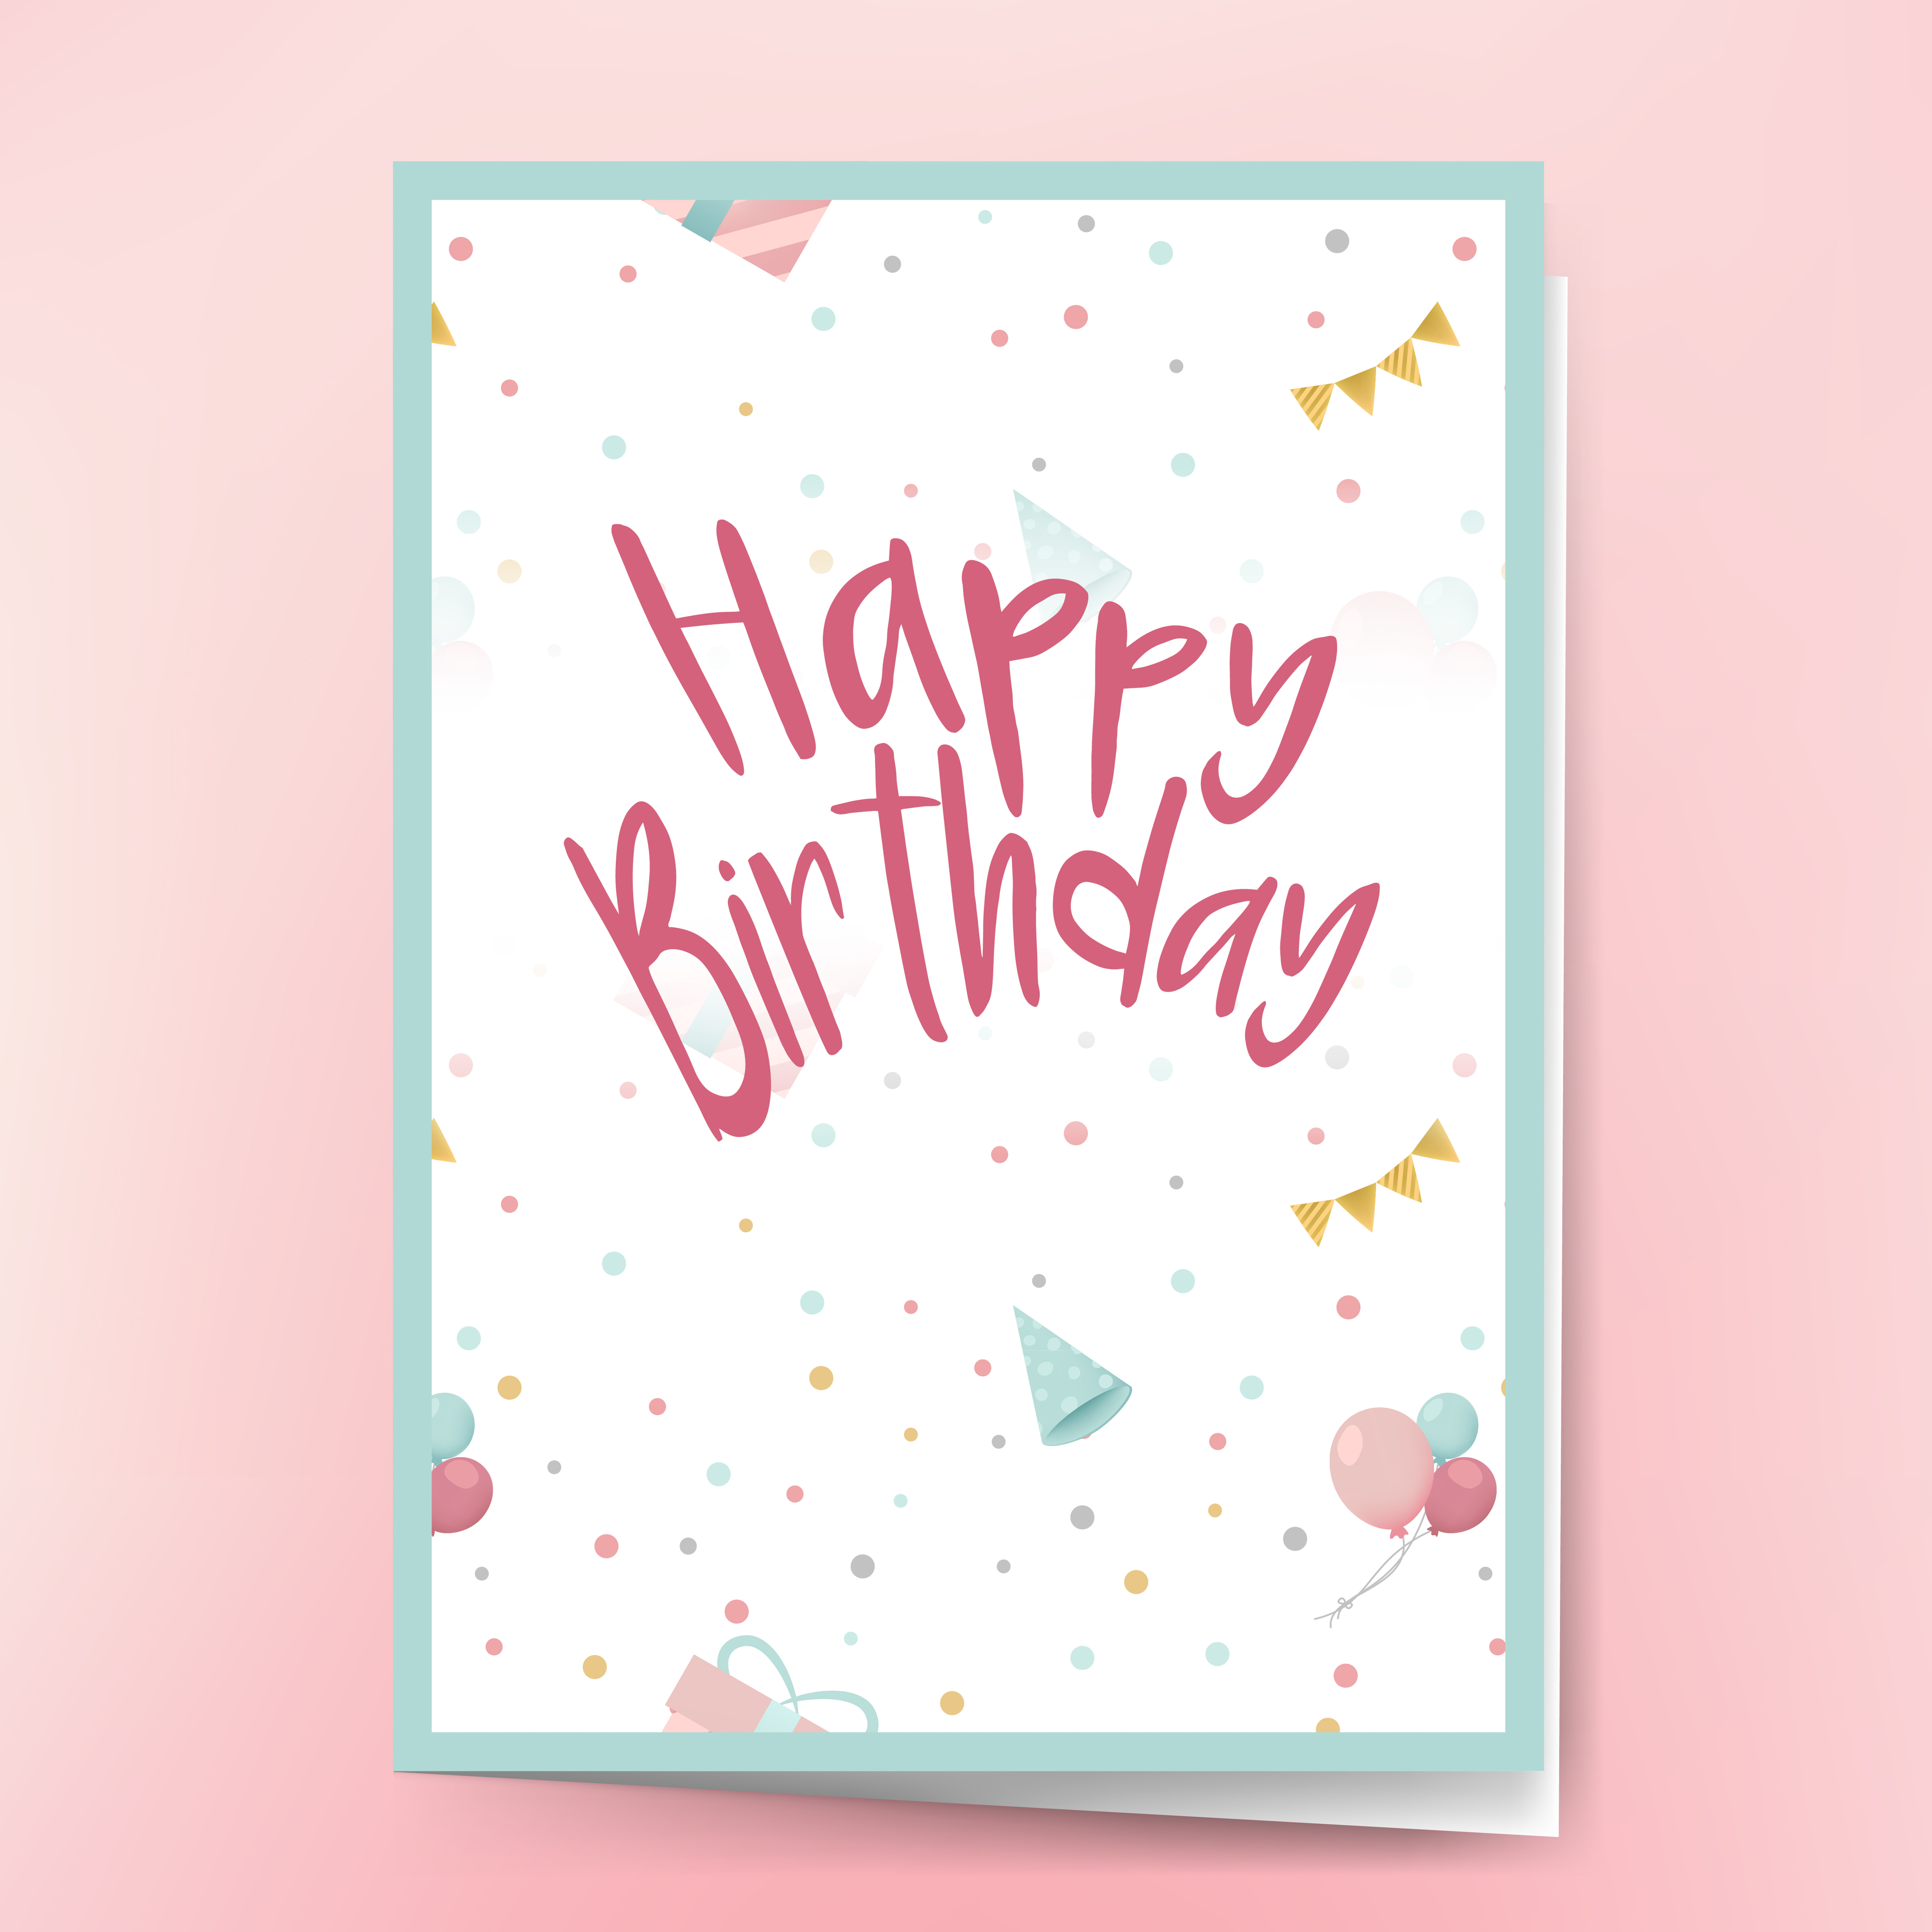 Happy birthday card design vector - Download Free Vectors, Clipart ...